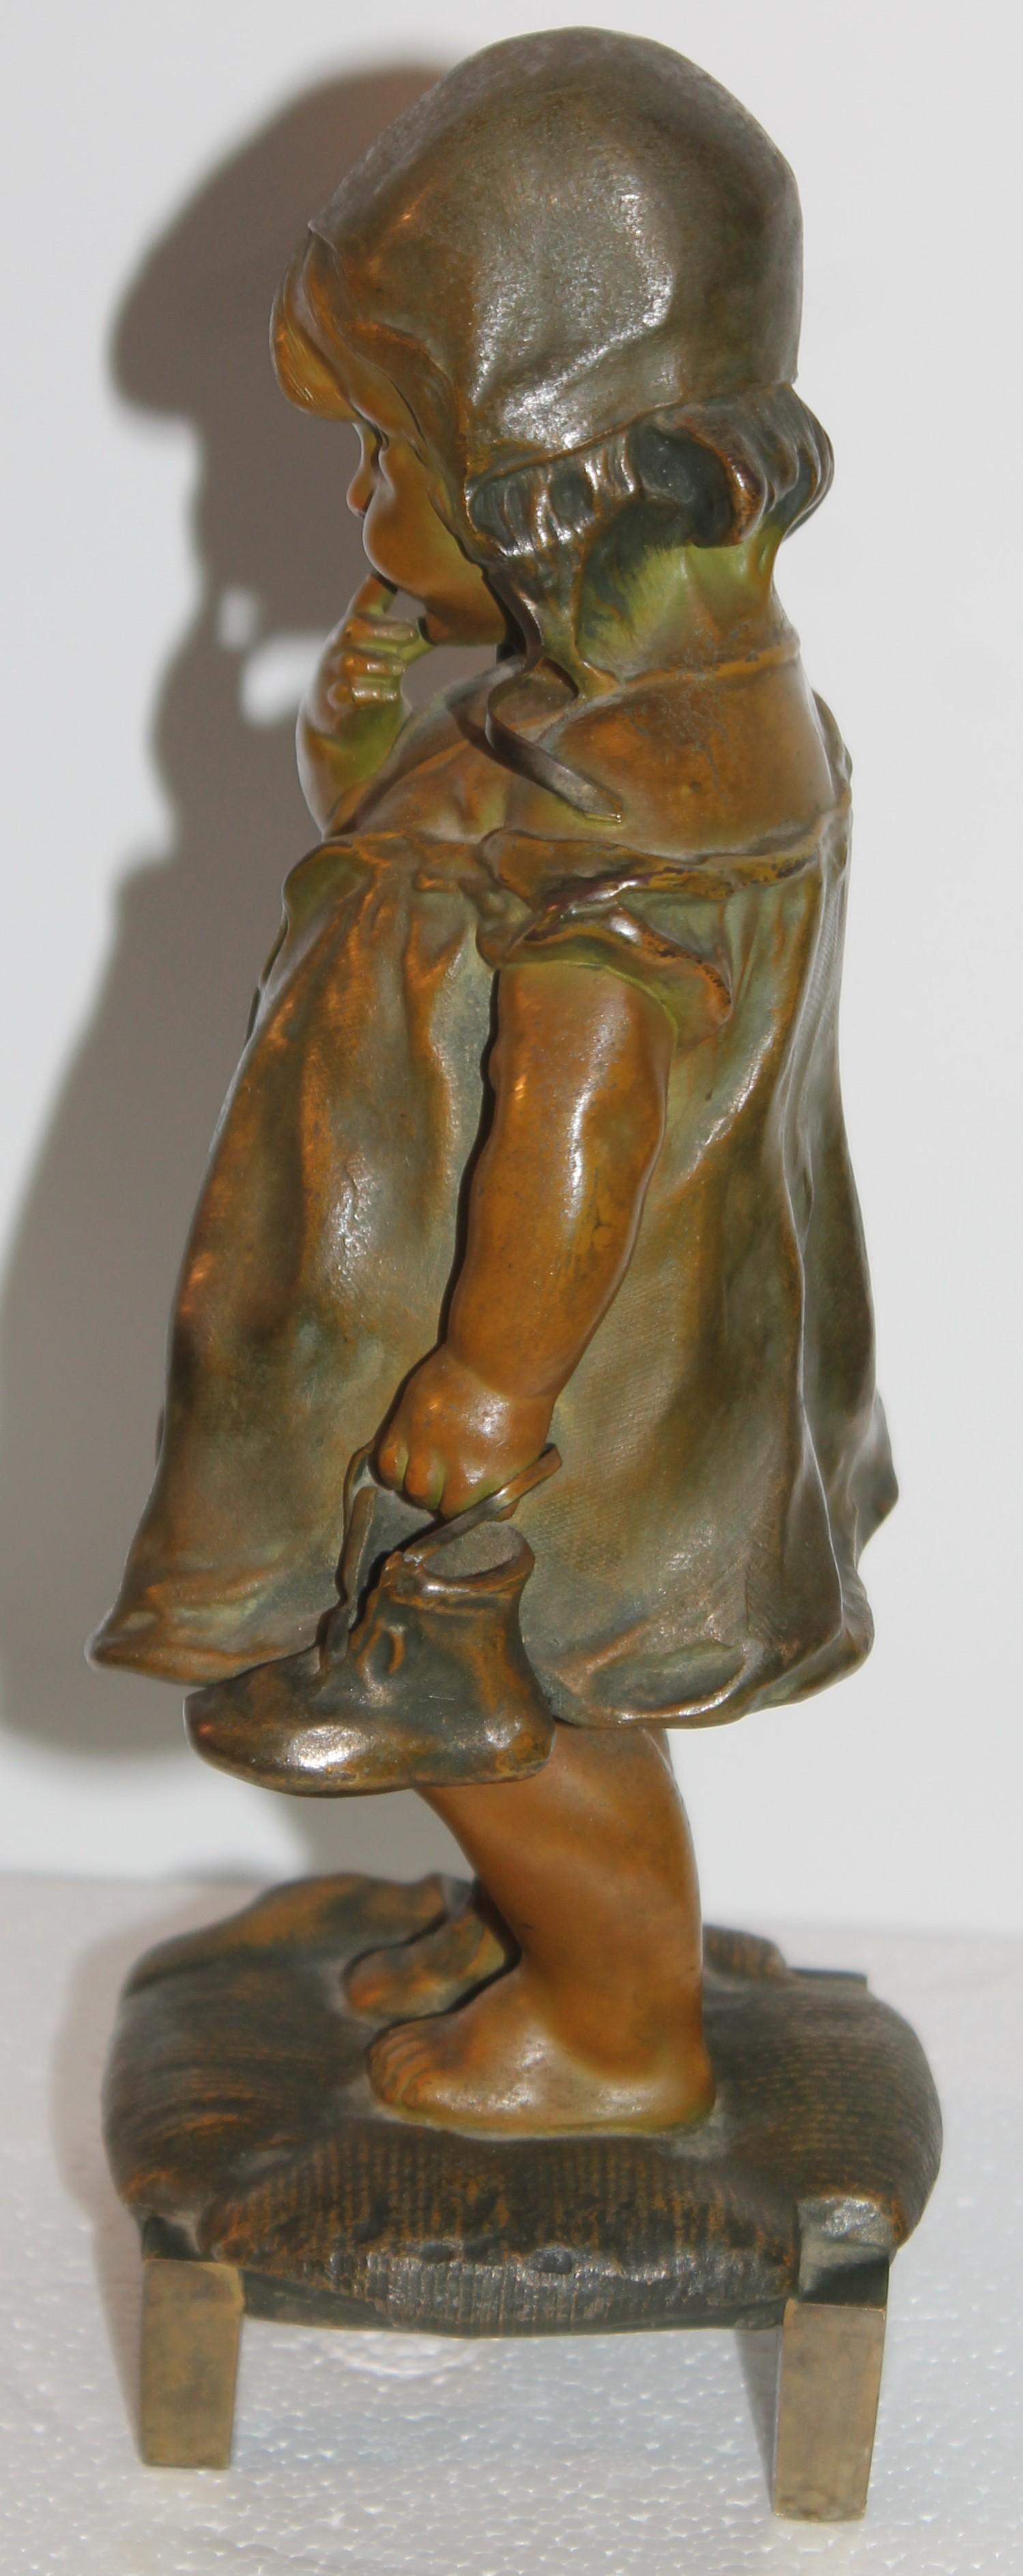 North American Juan Clara Art Noveau Girl on Stool  Bronze Sculpture Holding Shoe in Hand